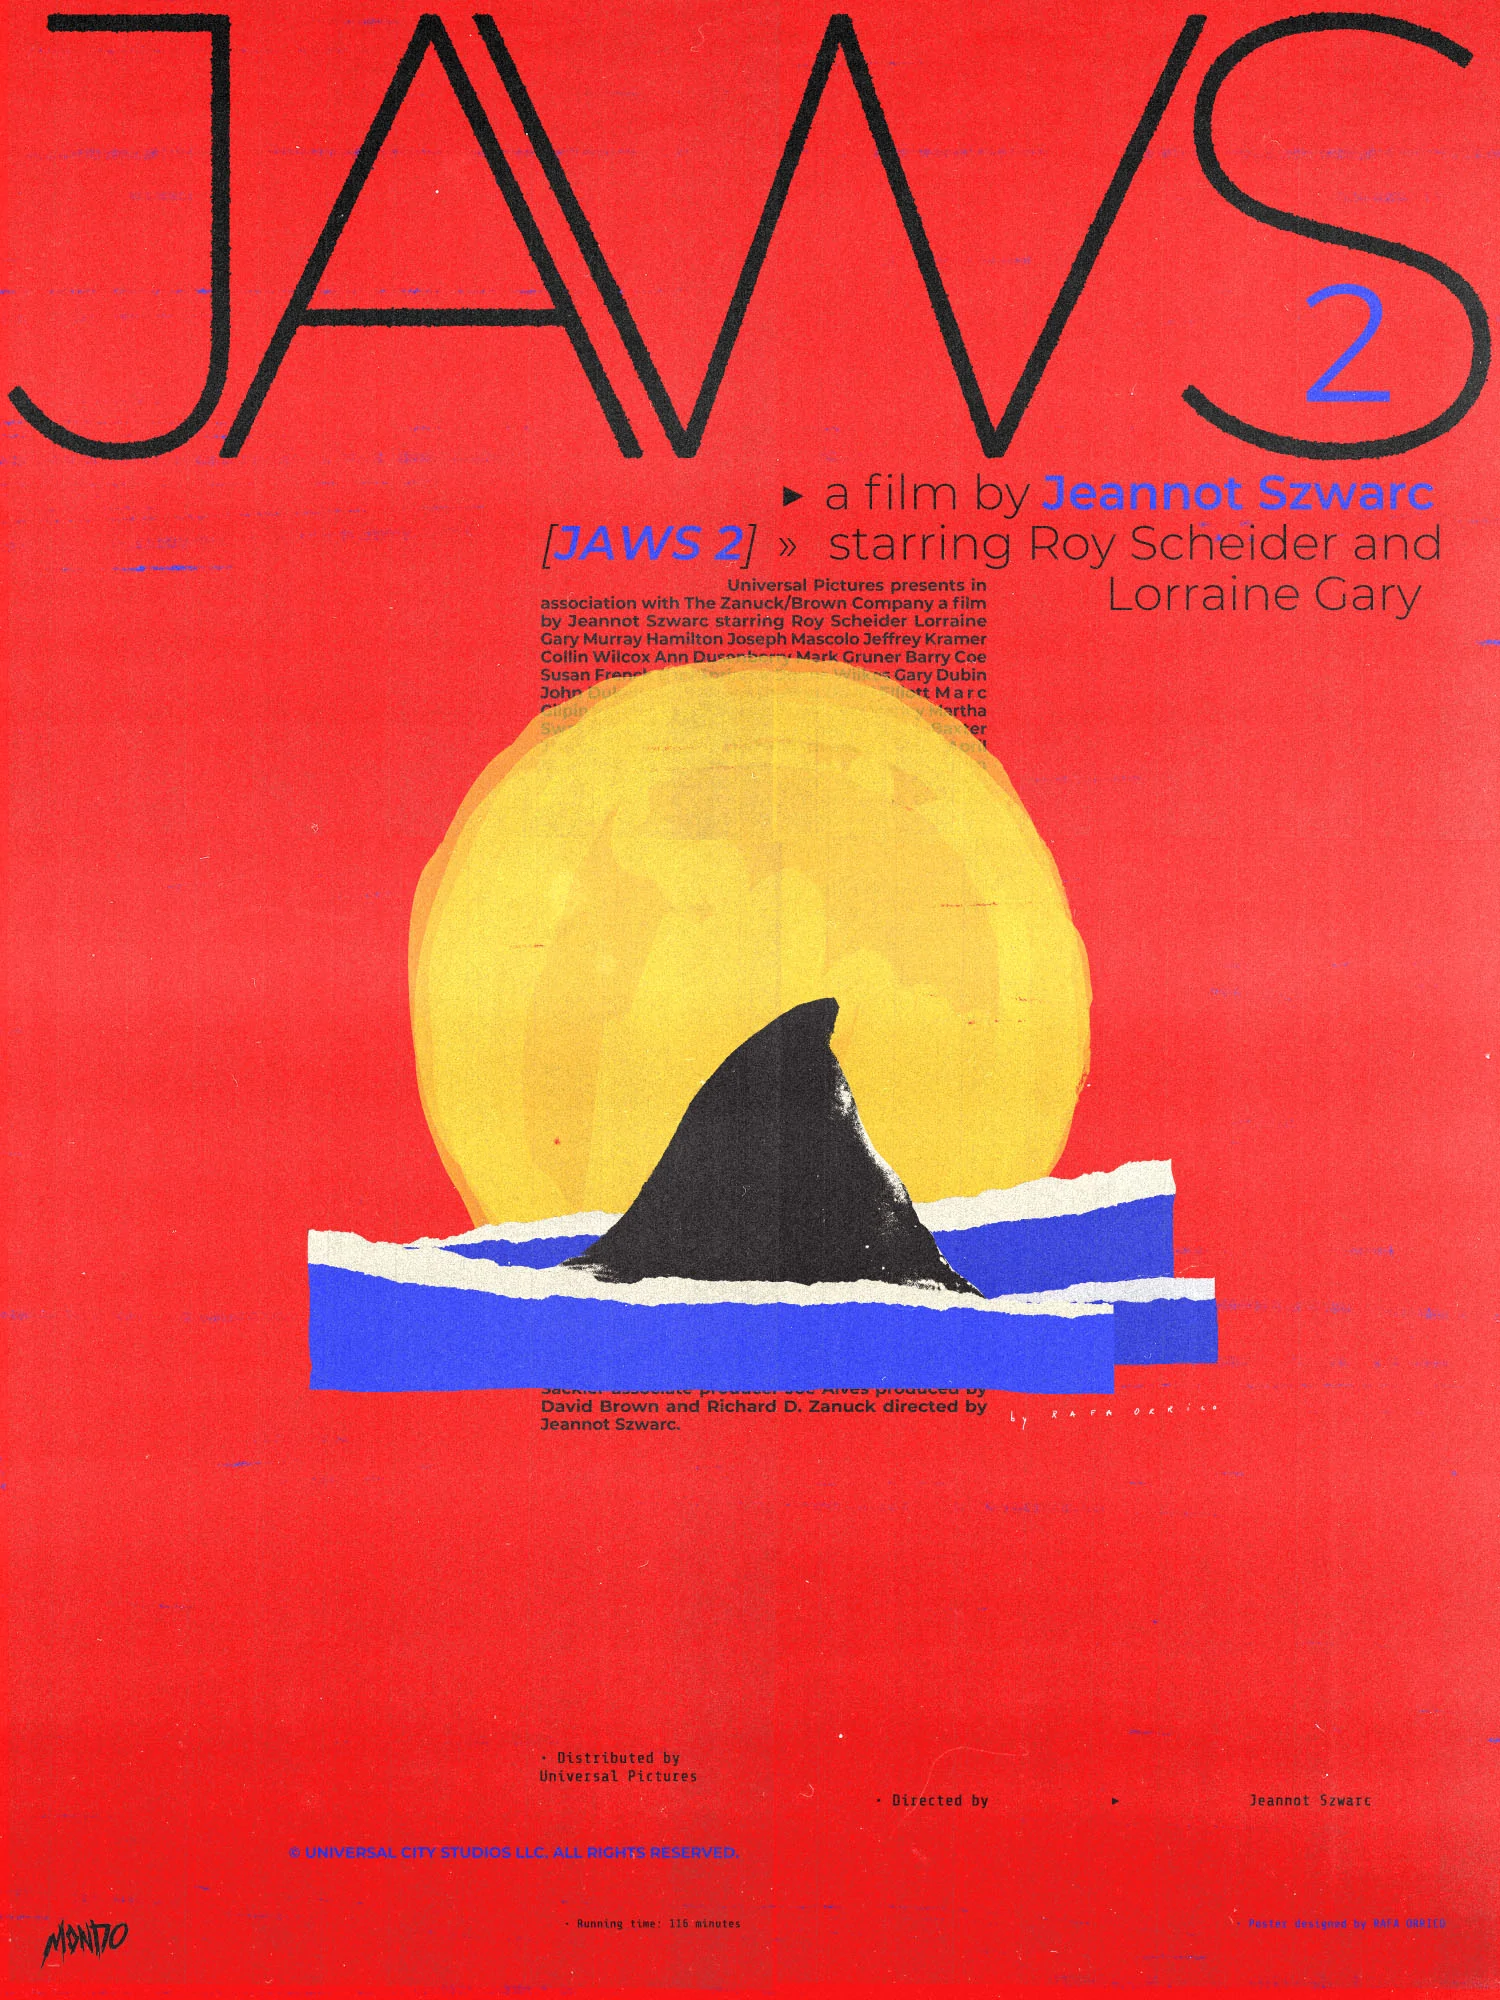 'Jaws 2' by Rafa Oricco 